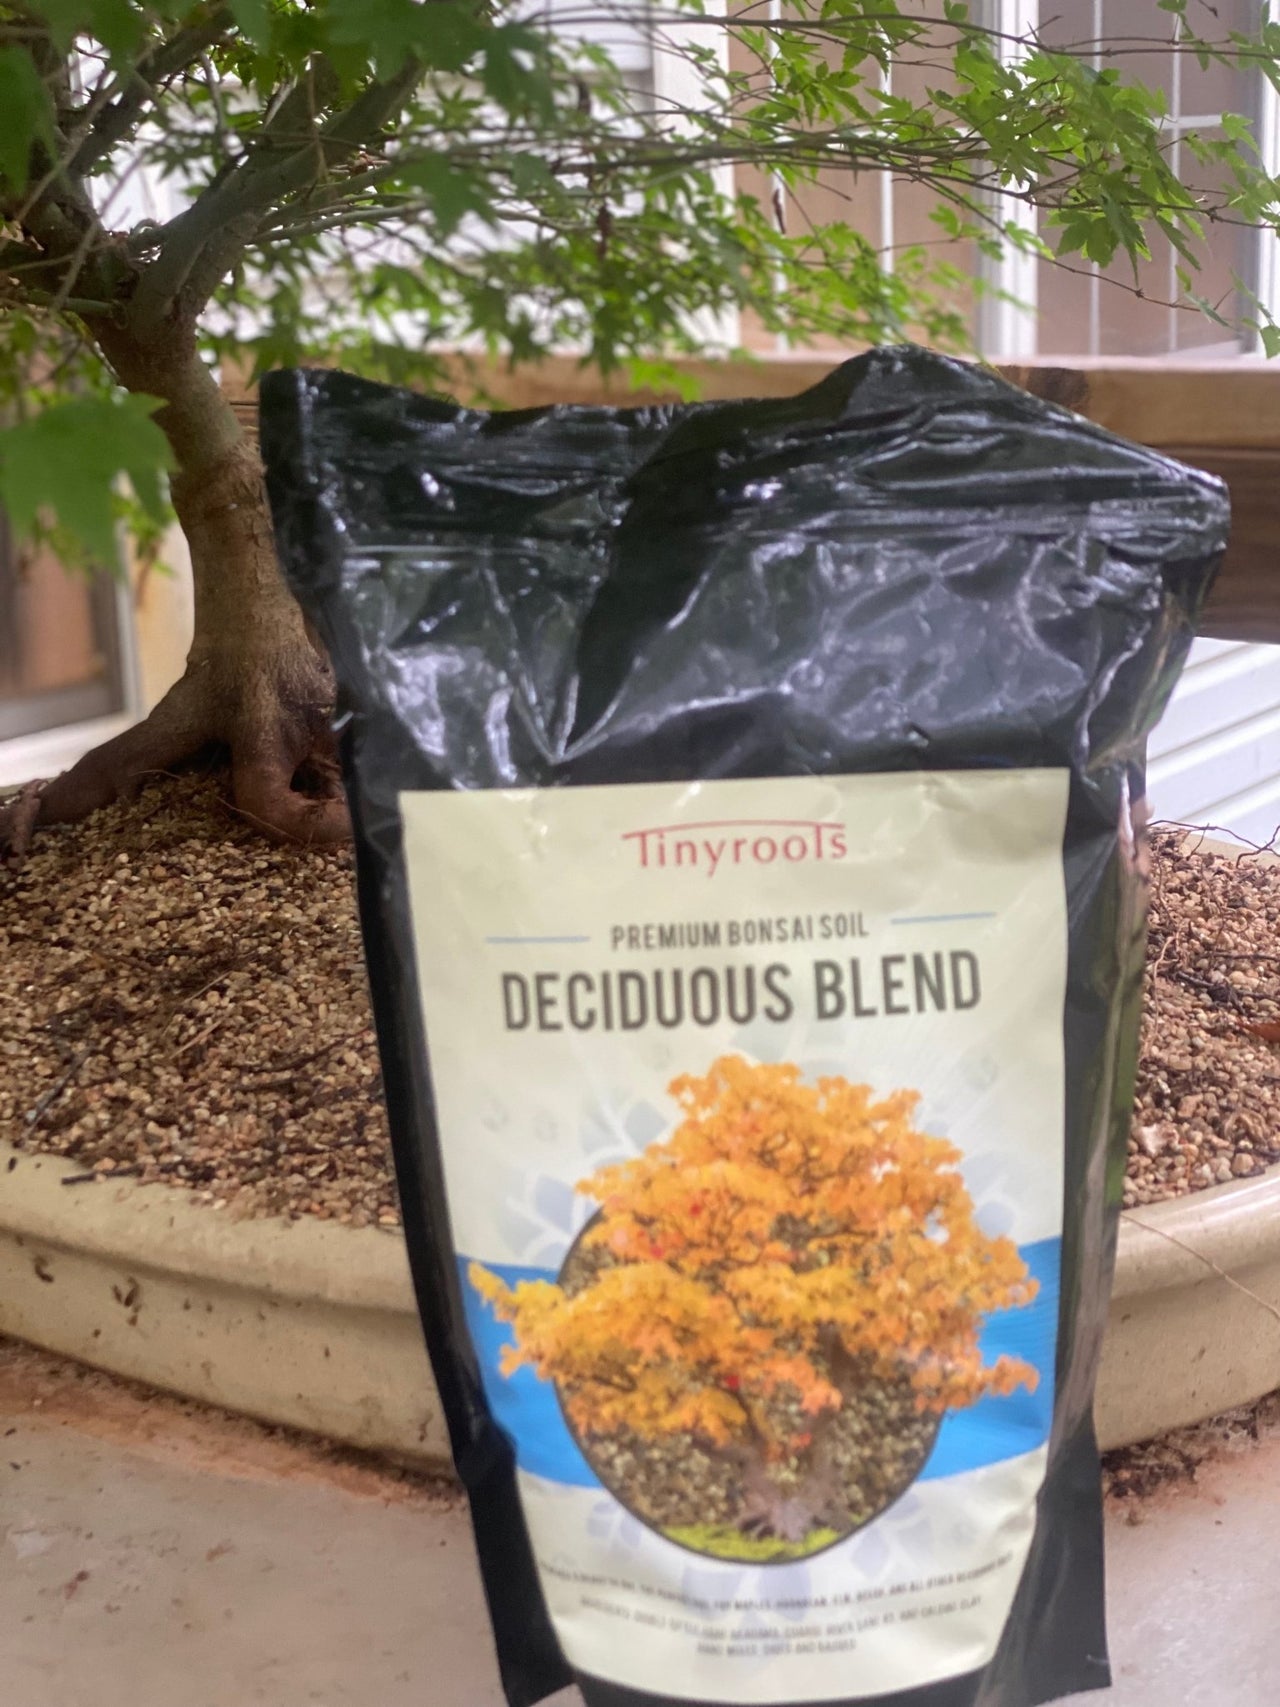 Tinyroots Premium Bonsai Soil Deciduous Blend - mapleridgenursery